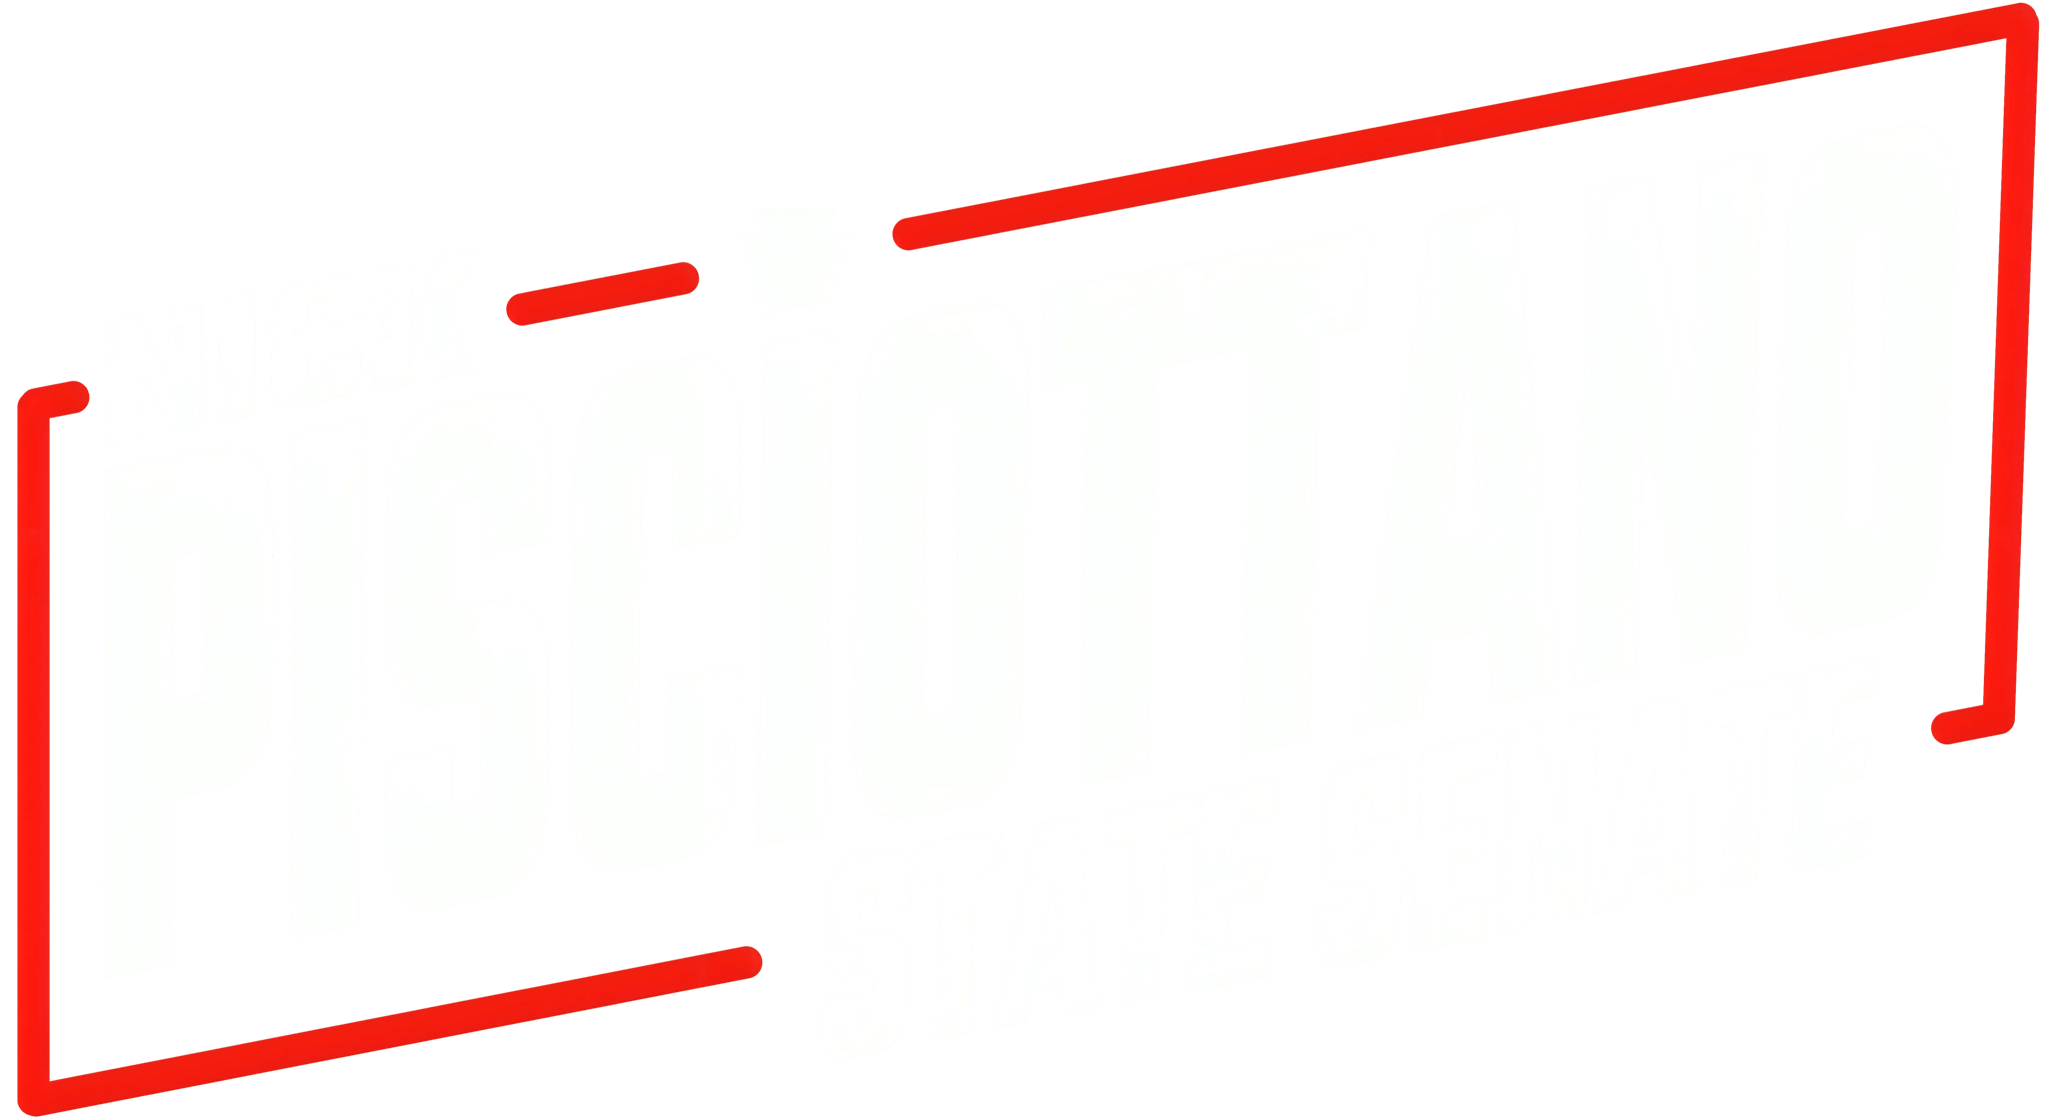 Nick Pisciottano for State Senate logo